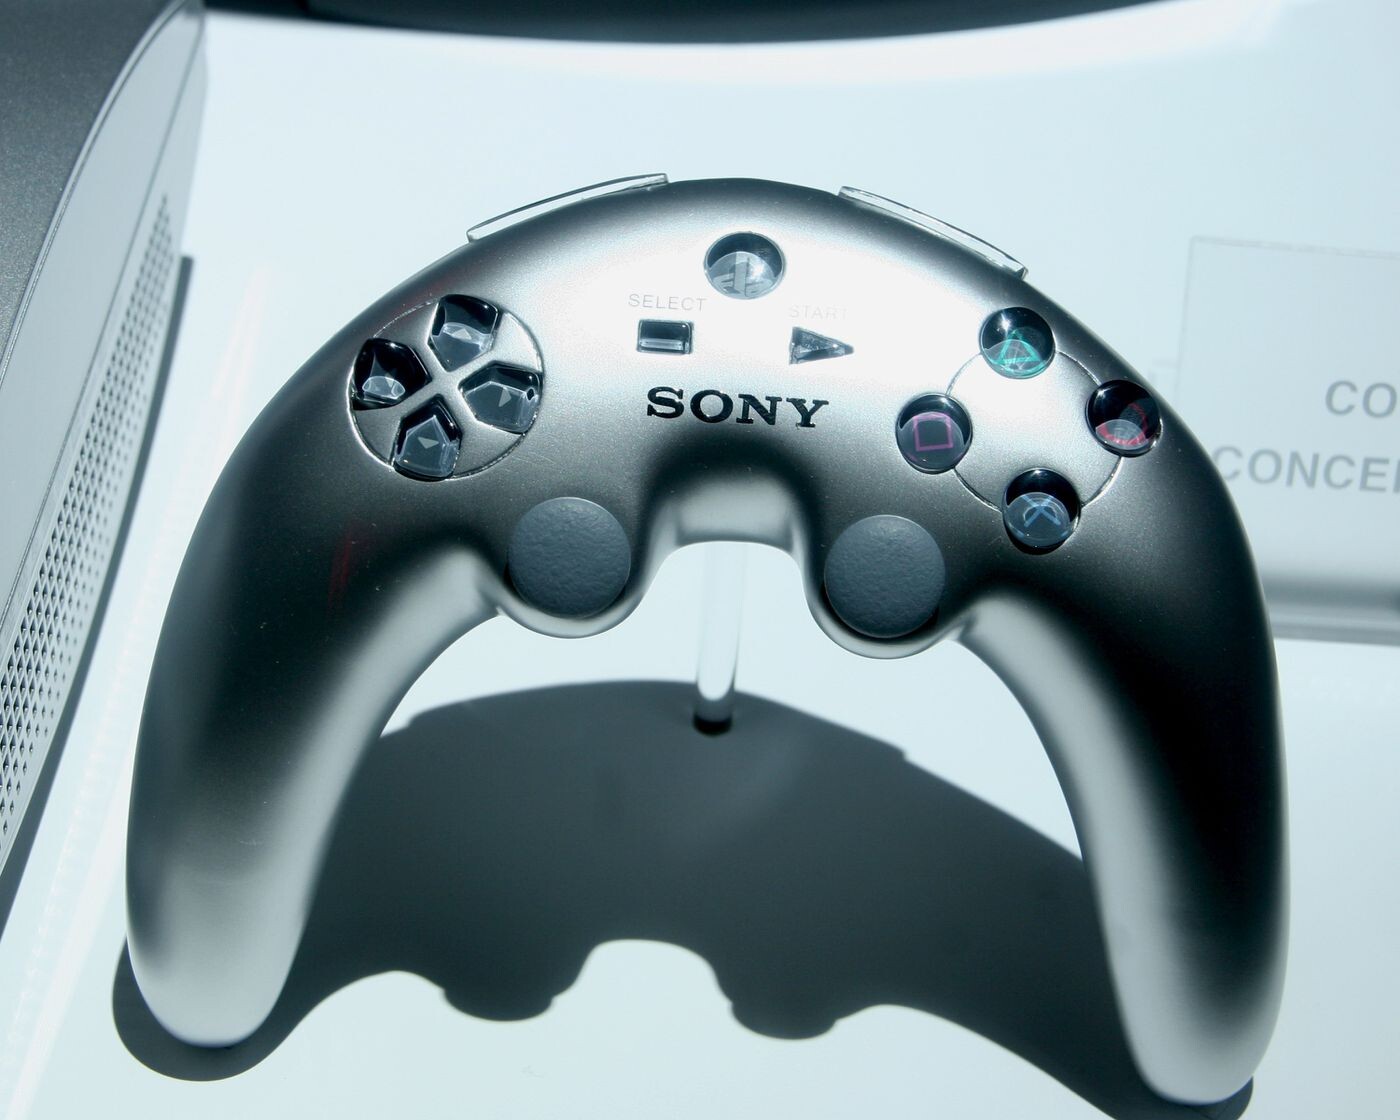  Sony PlayStation 3 Boomerang Prototype  Controller